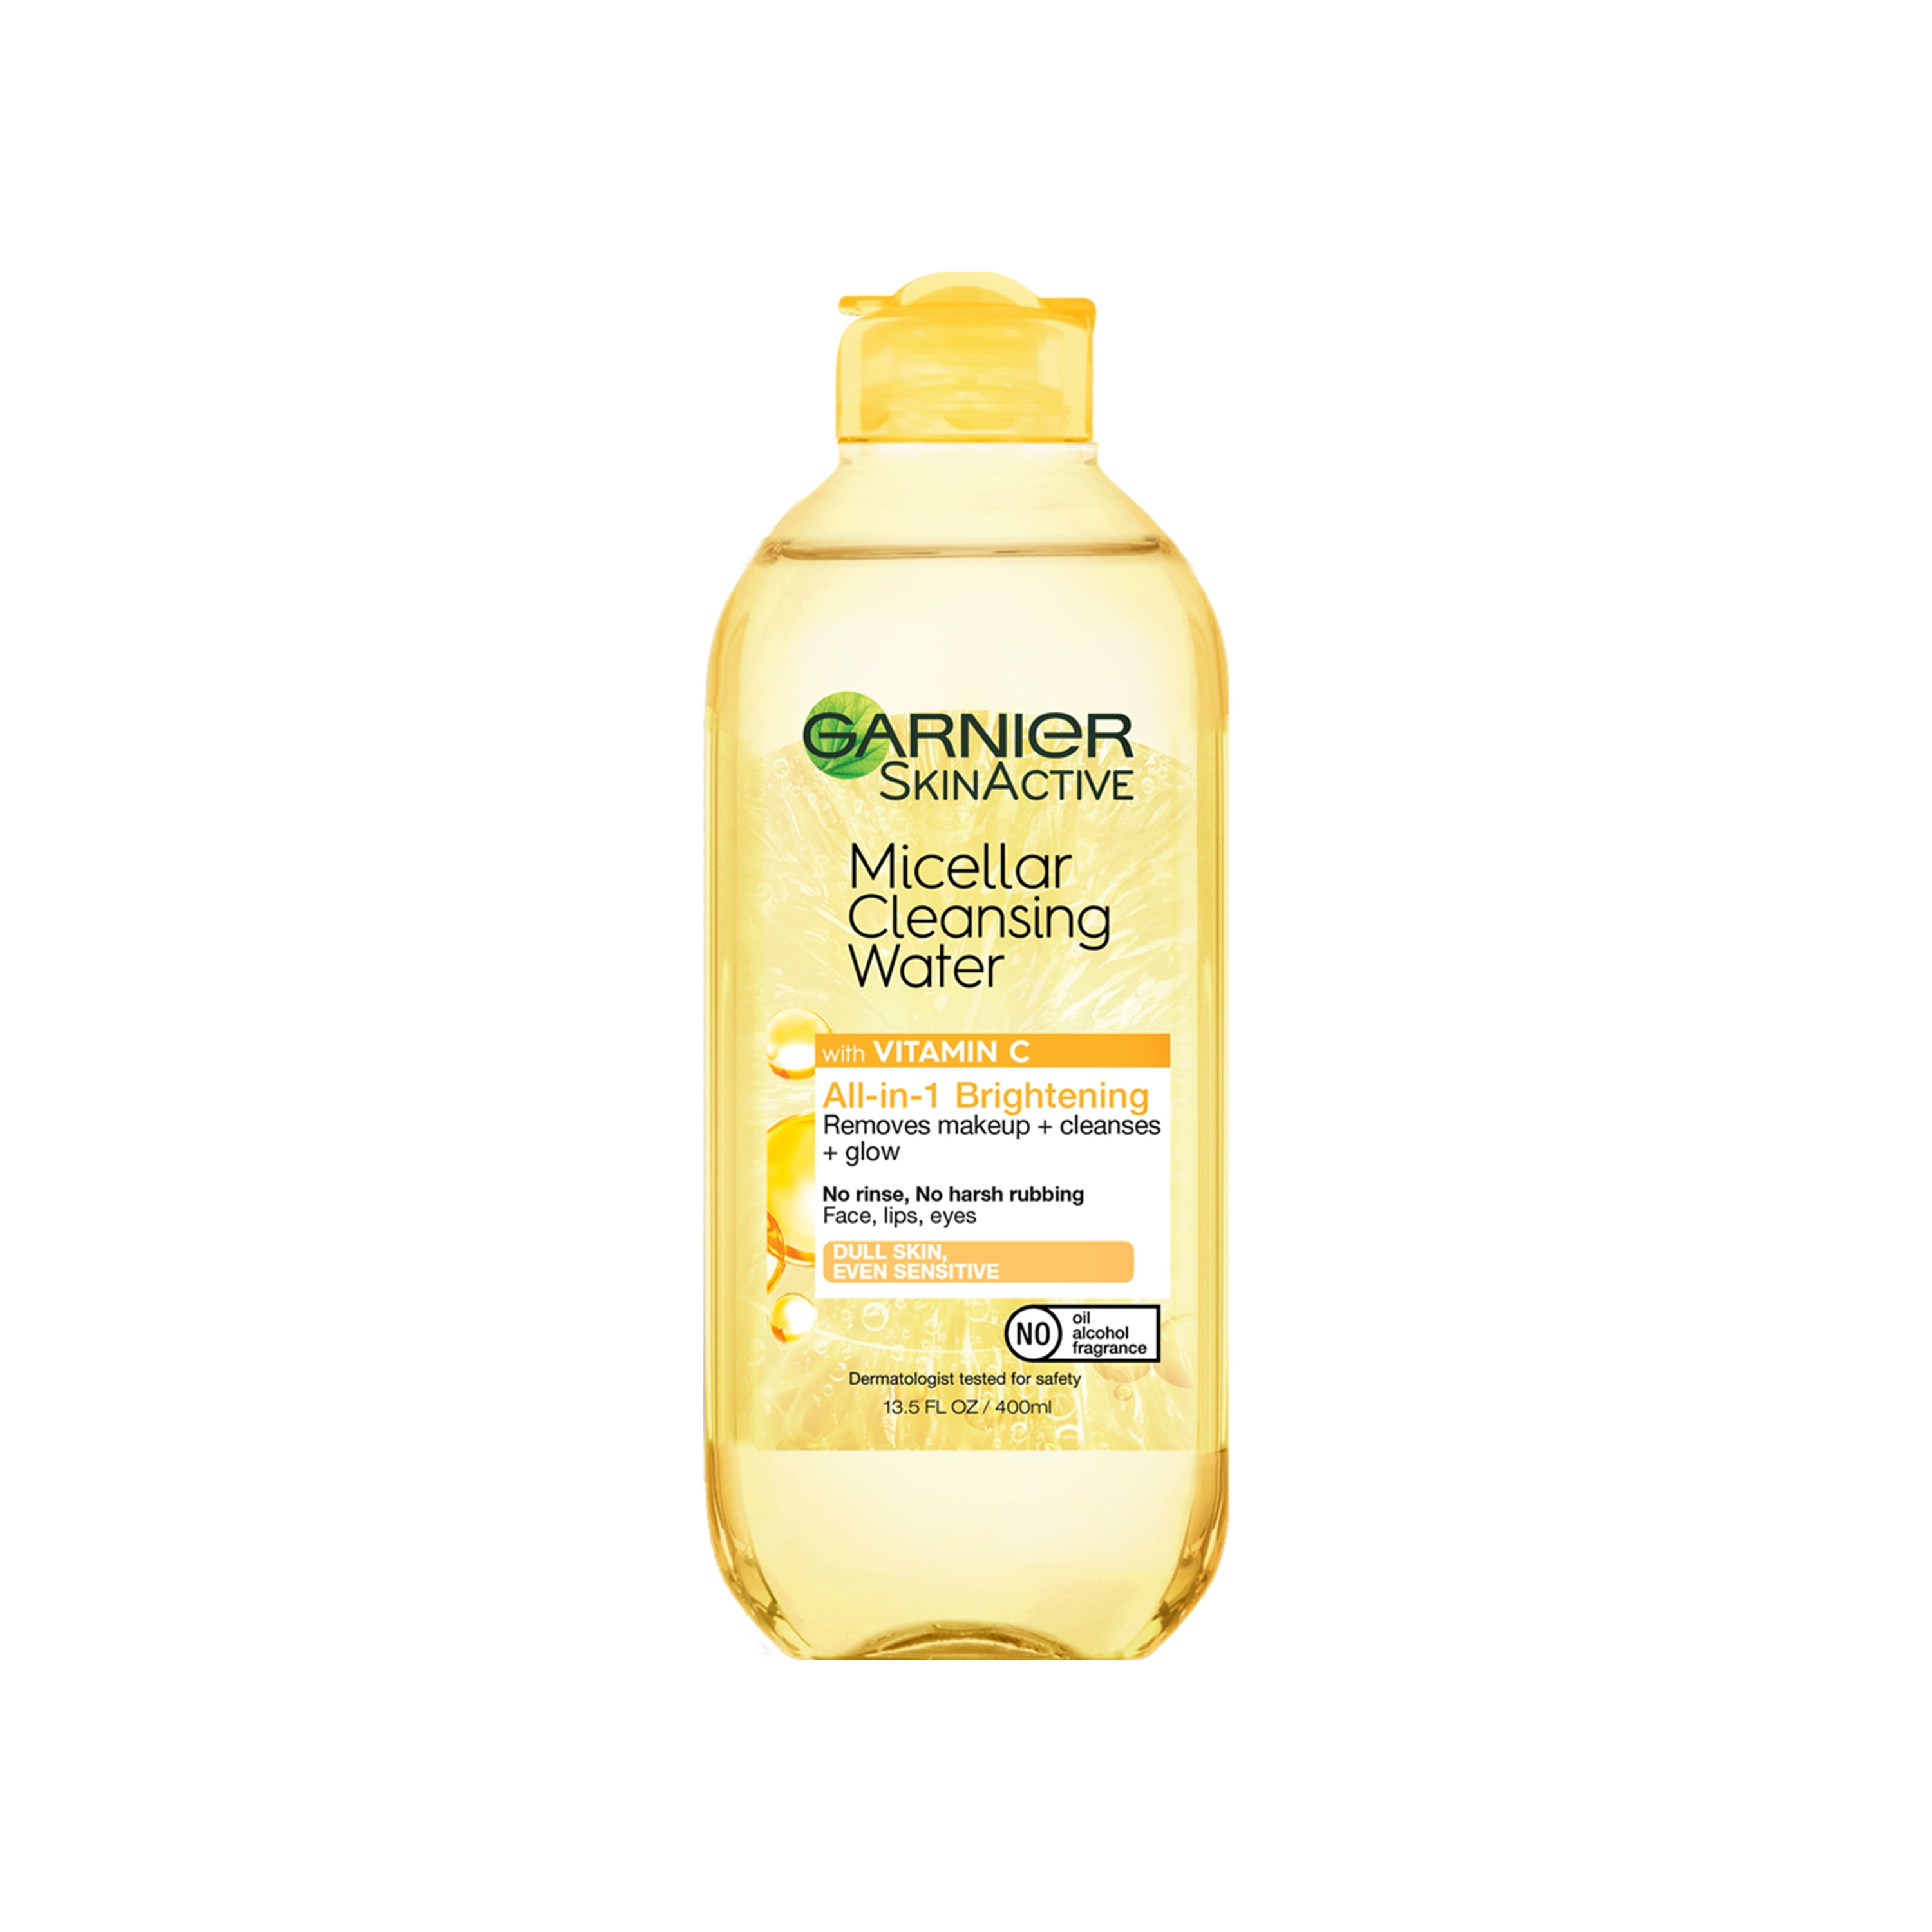 Garnier SkinActive Micellar Cleansing Water with Vitamin C, 13.5 fl oz